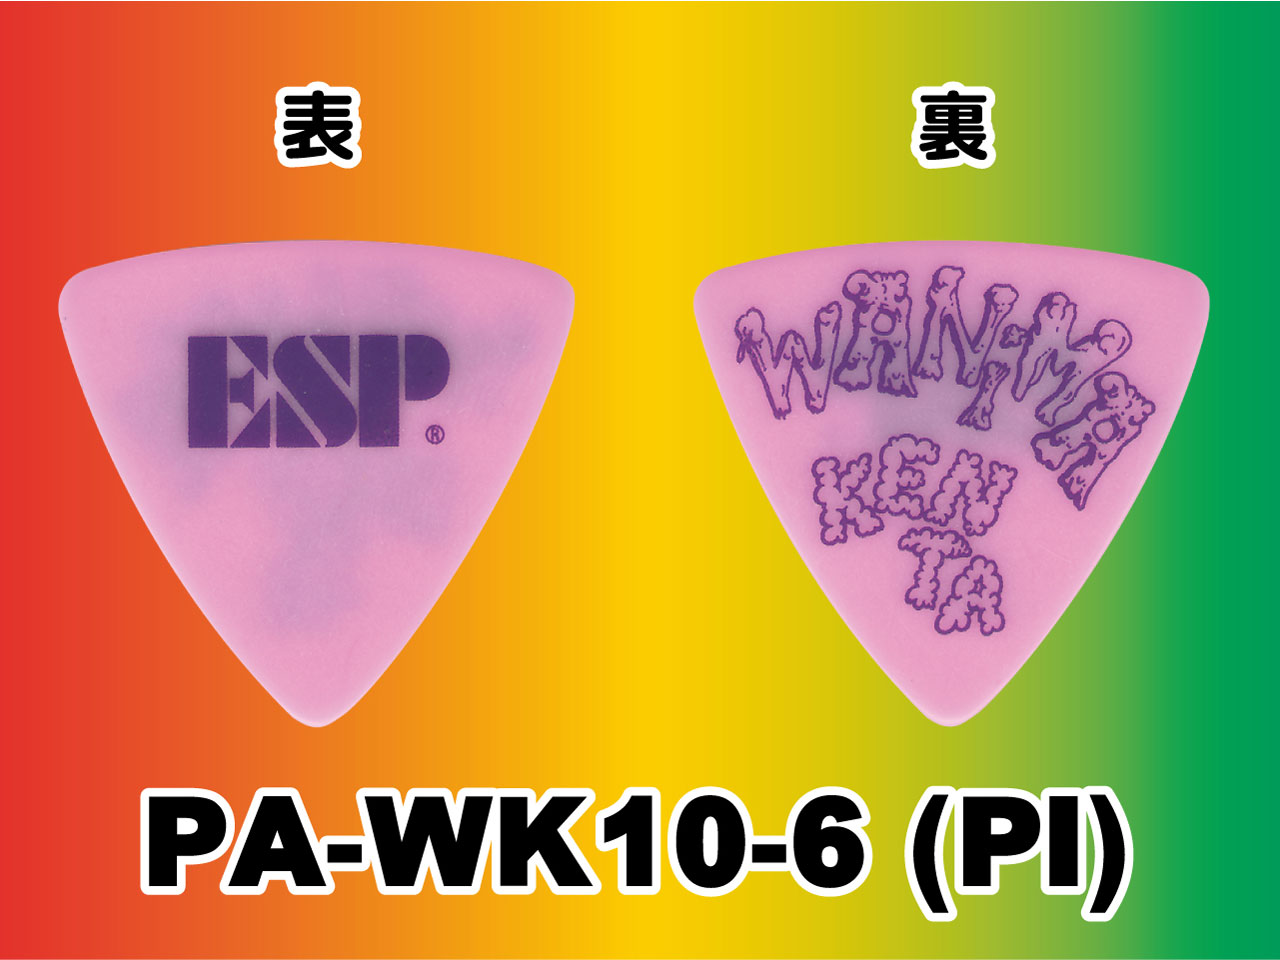 ESP(イーエスピー) Artist Pick Series PA-WK10-6 (WANIMA/KENTA Model)